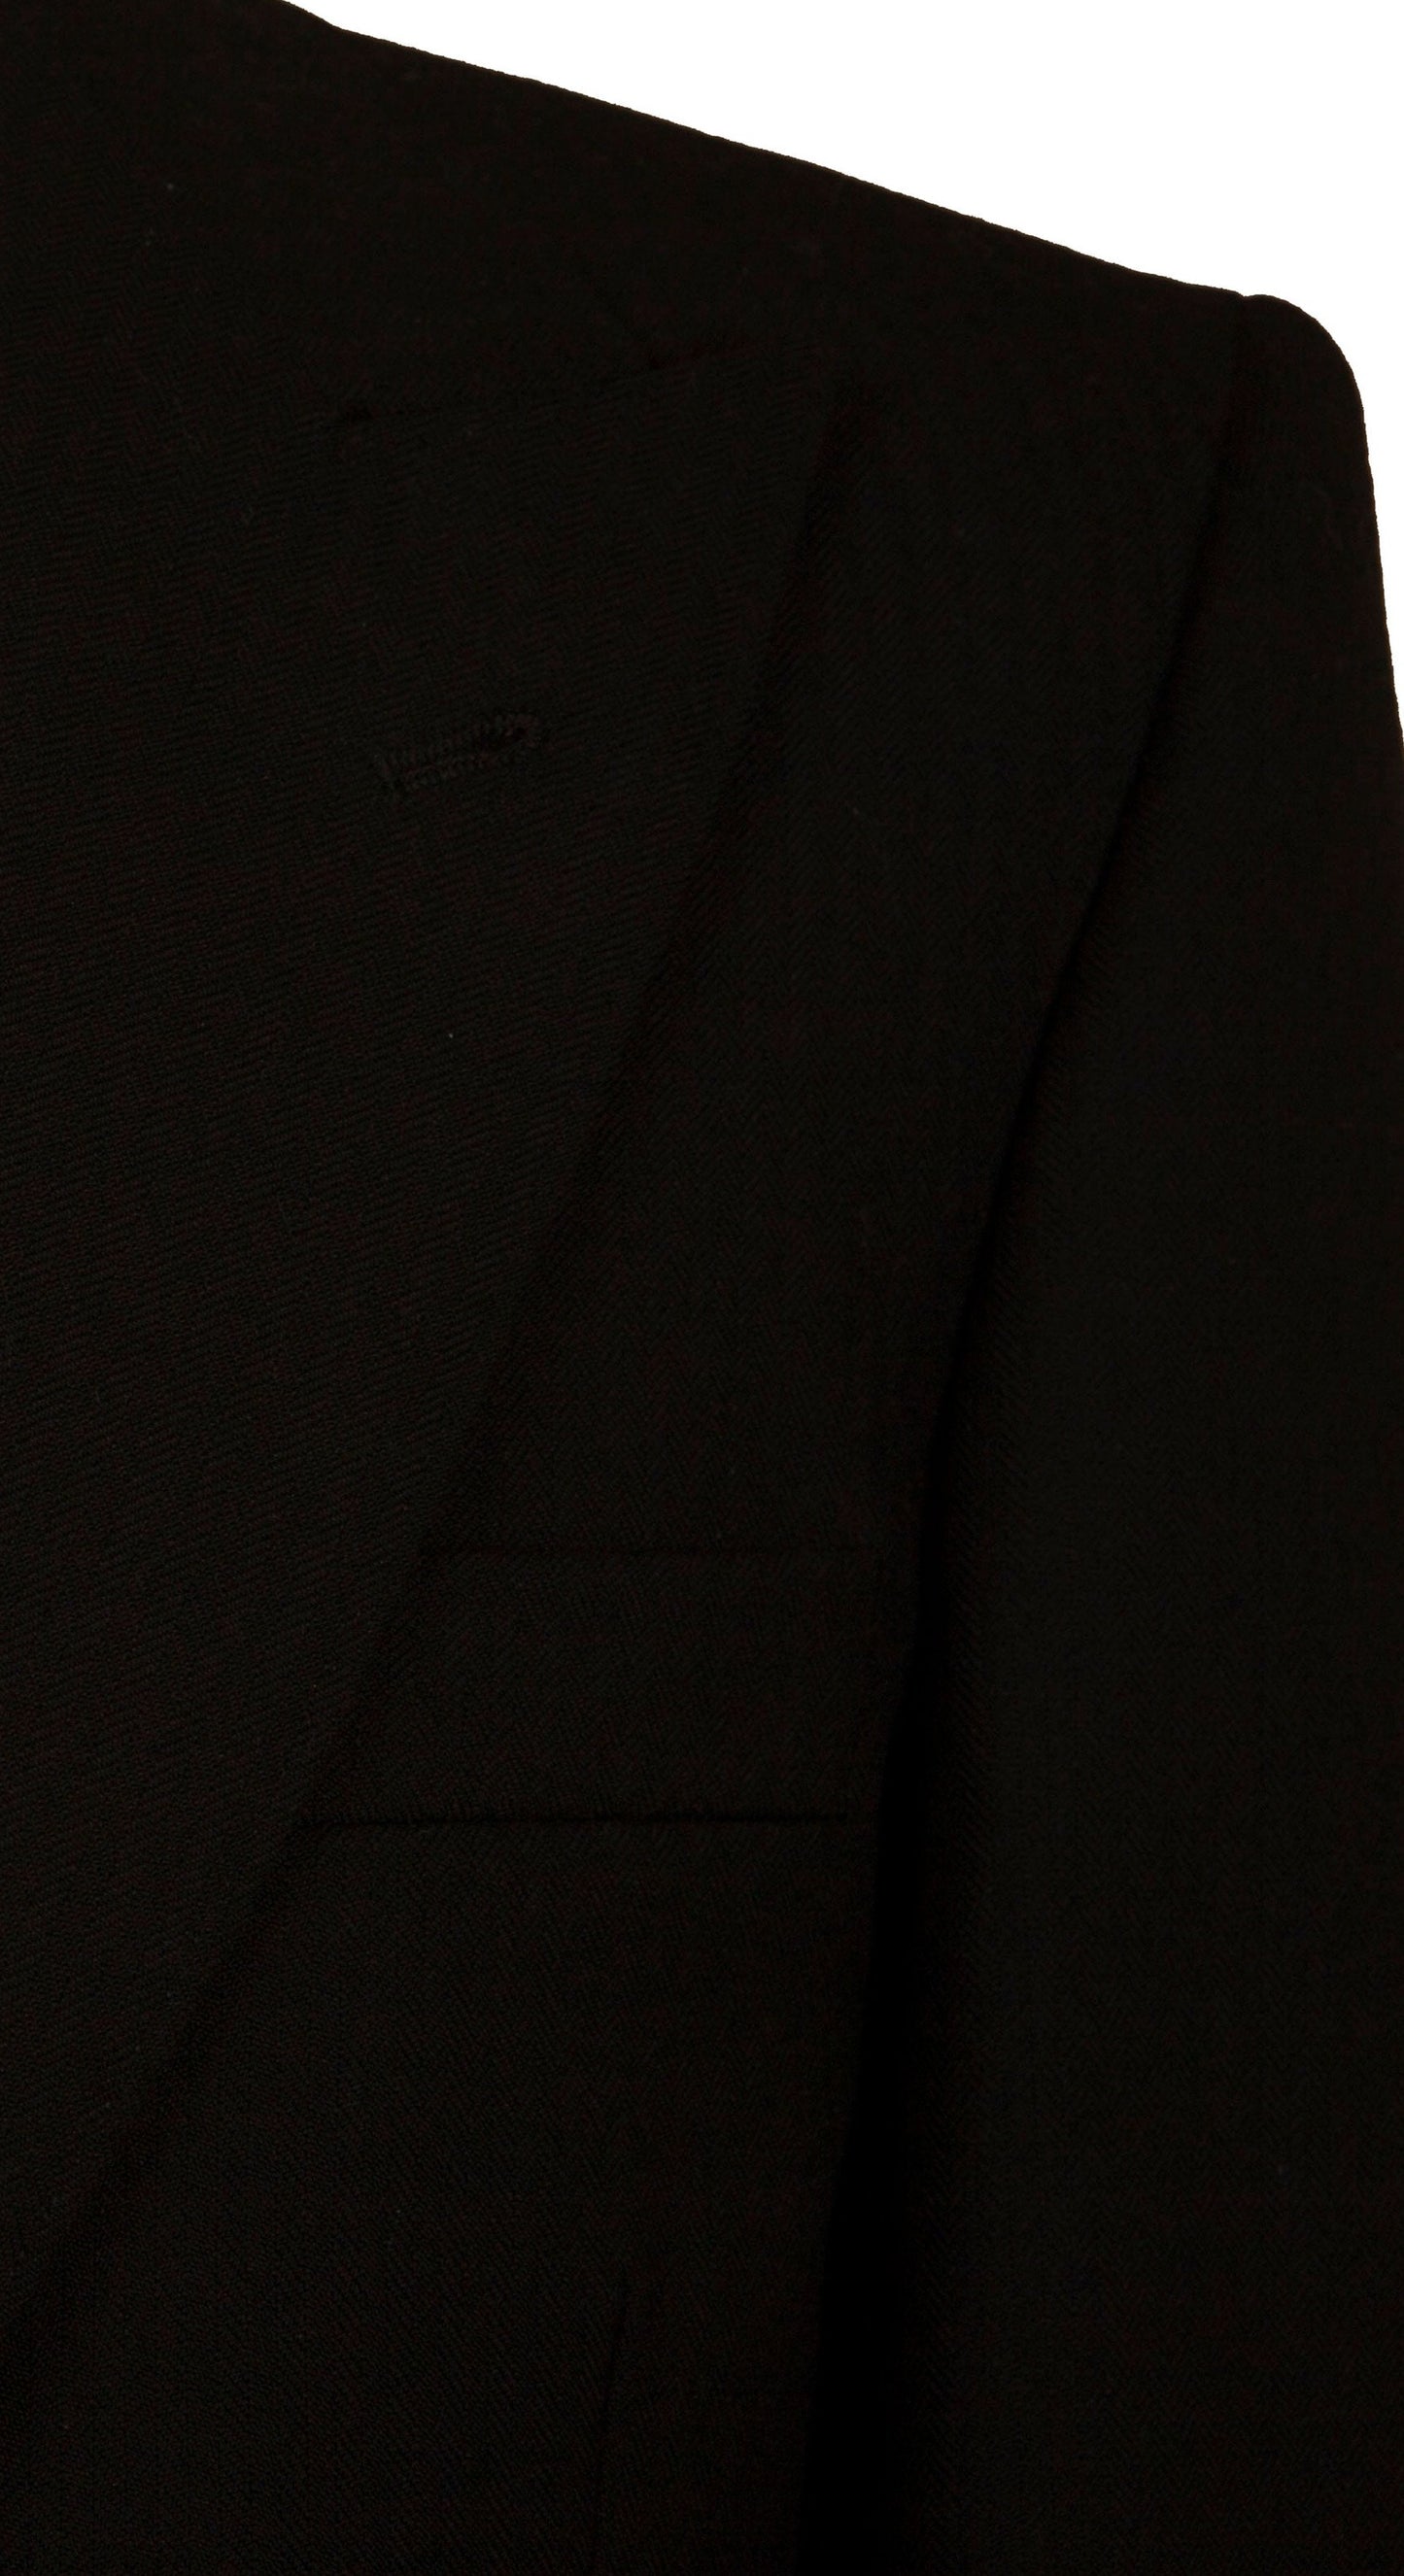 Black 3 Piece Herringbone Tailcoat Suit with Pinstripe Trousers & Grey Waistcoat - Ex Hire